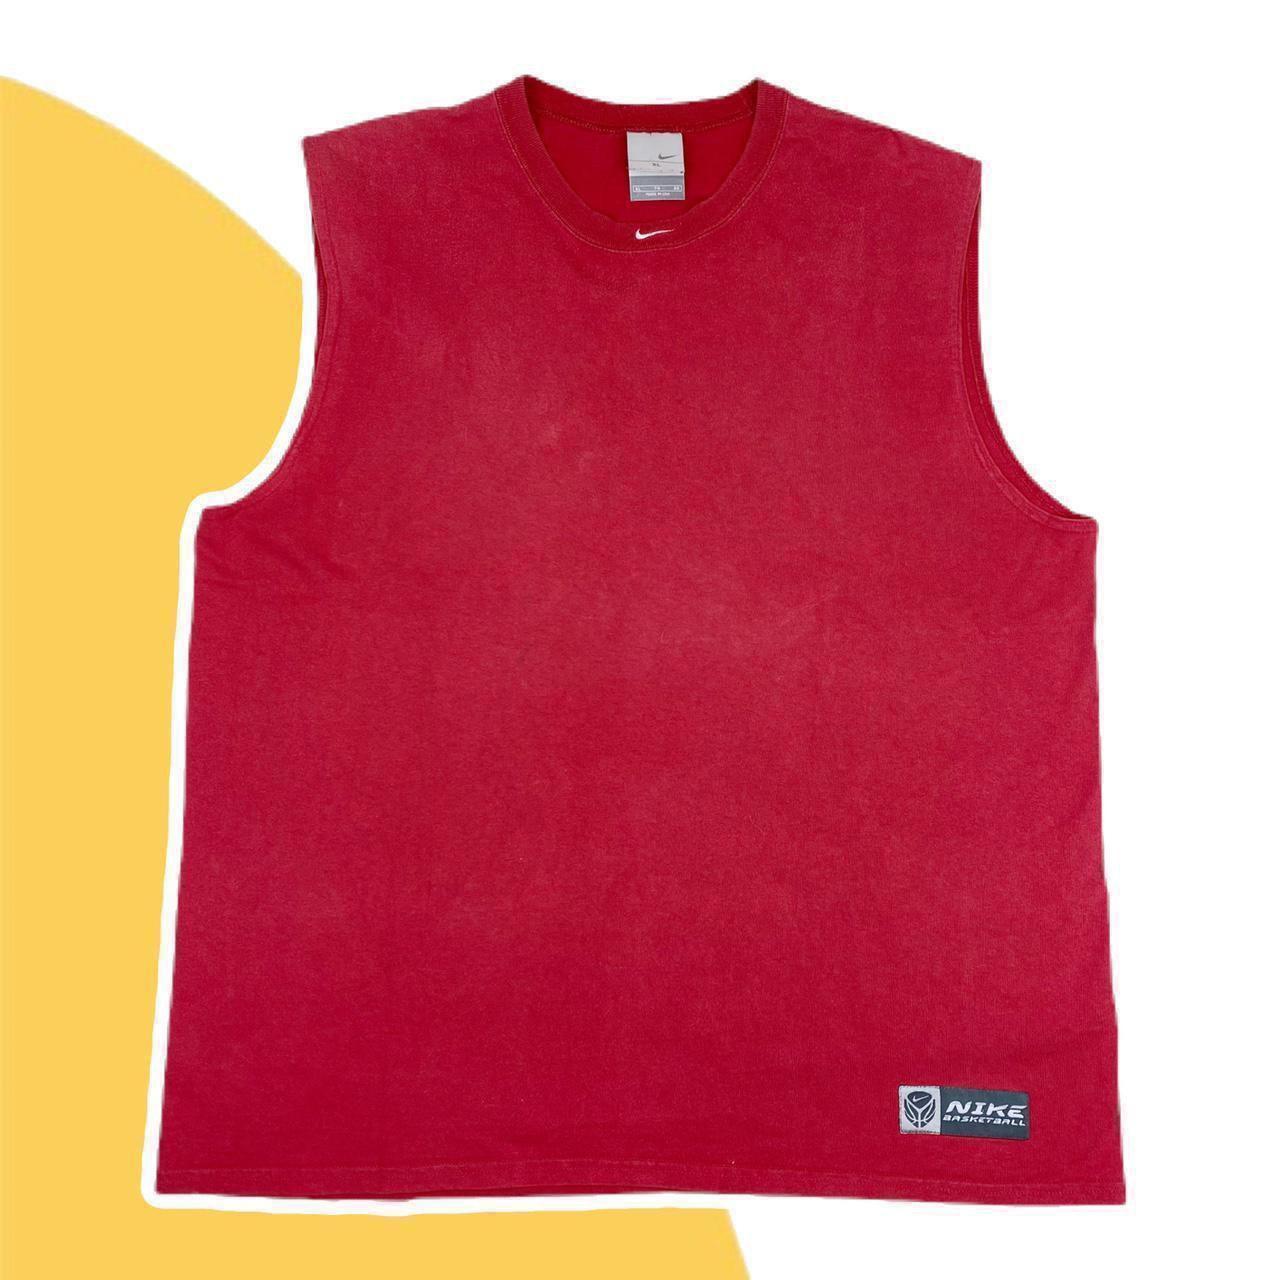 Nike Men's Red Vest